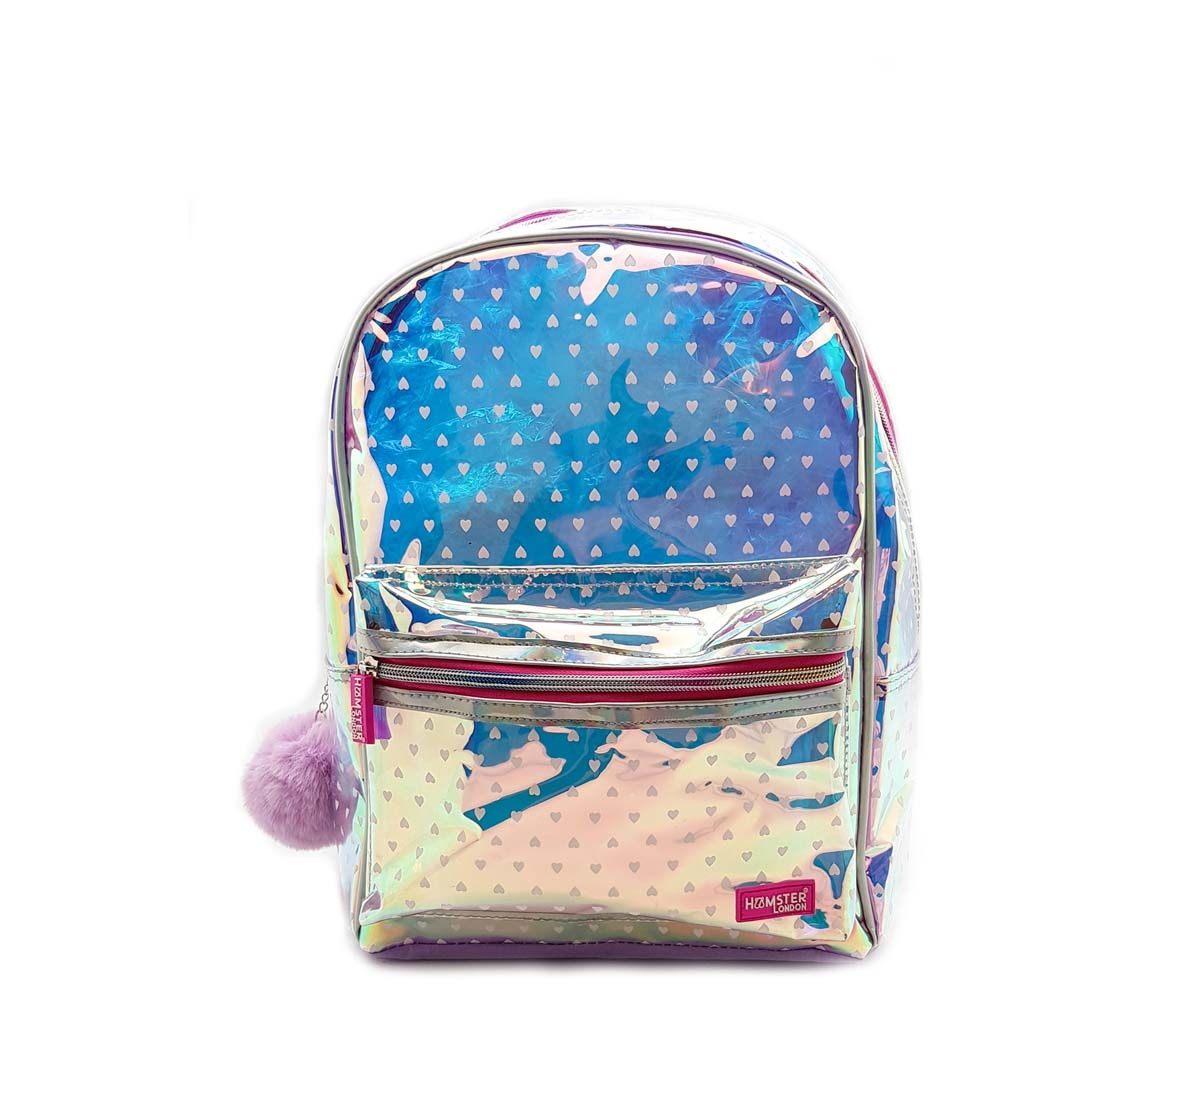 Hamster London | Hamster London Shiny Heart Backpack Travel for Kids Age 3Y+ 0